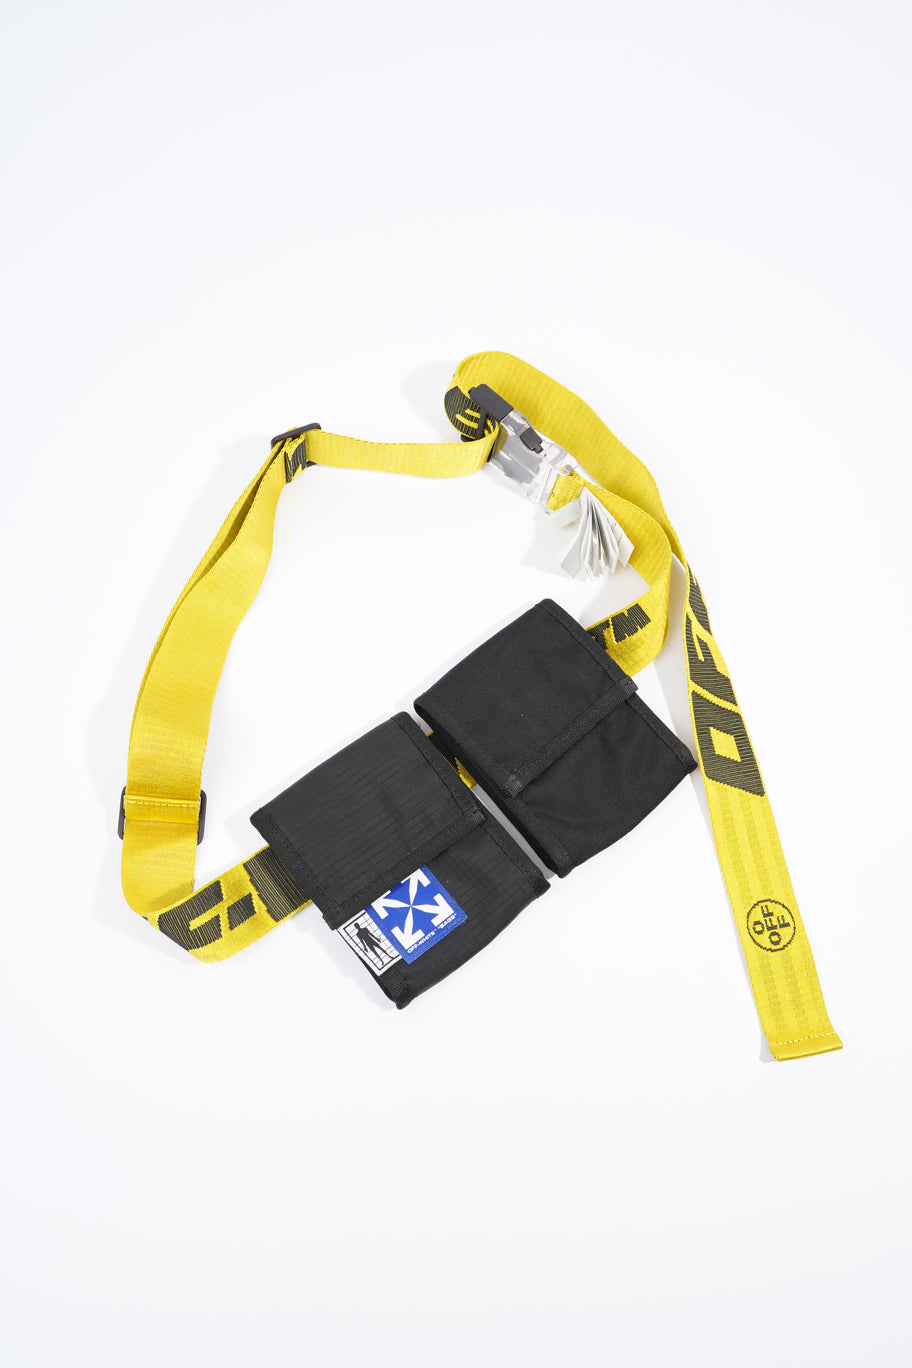 Two Pocket Belt Yellow / Black Fabric Image 8